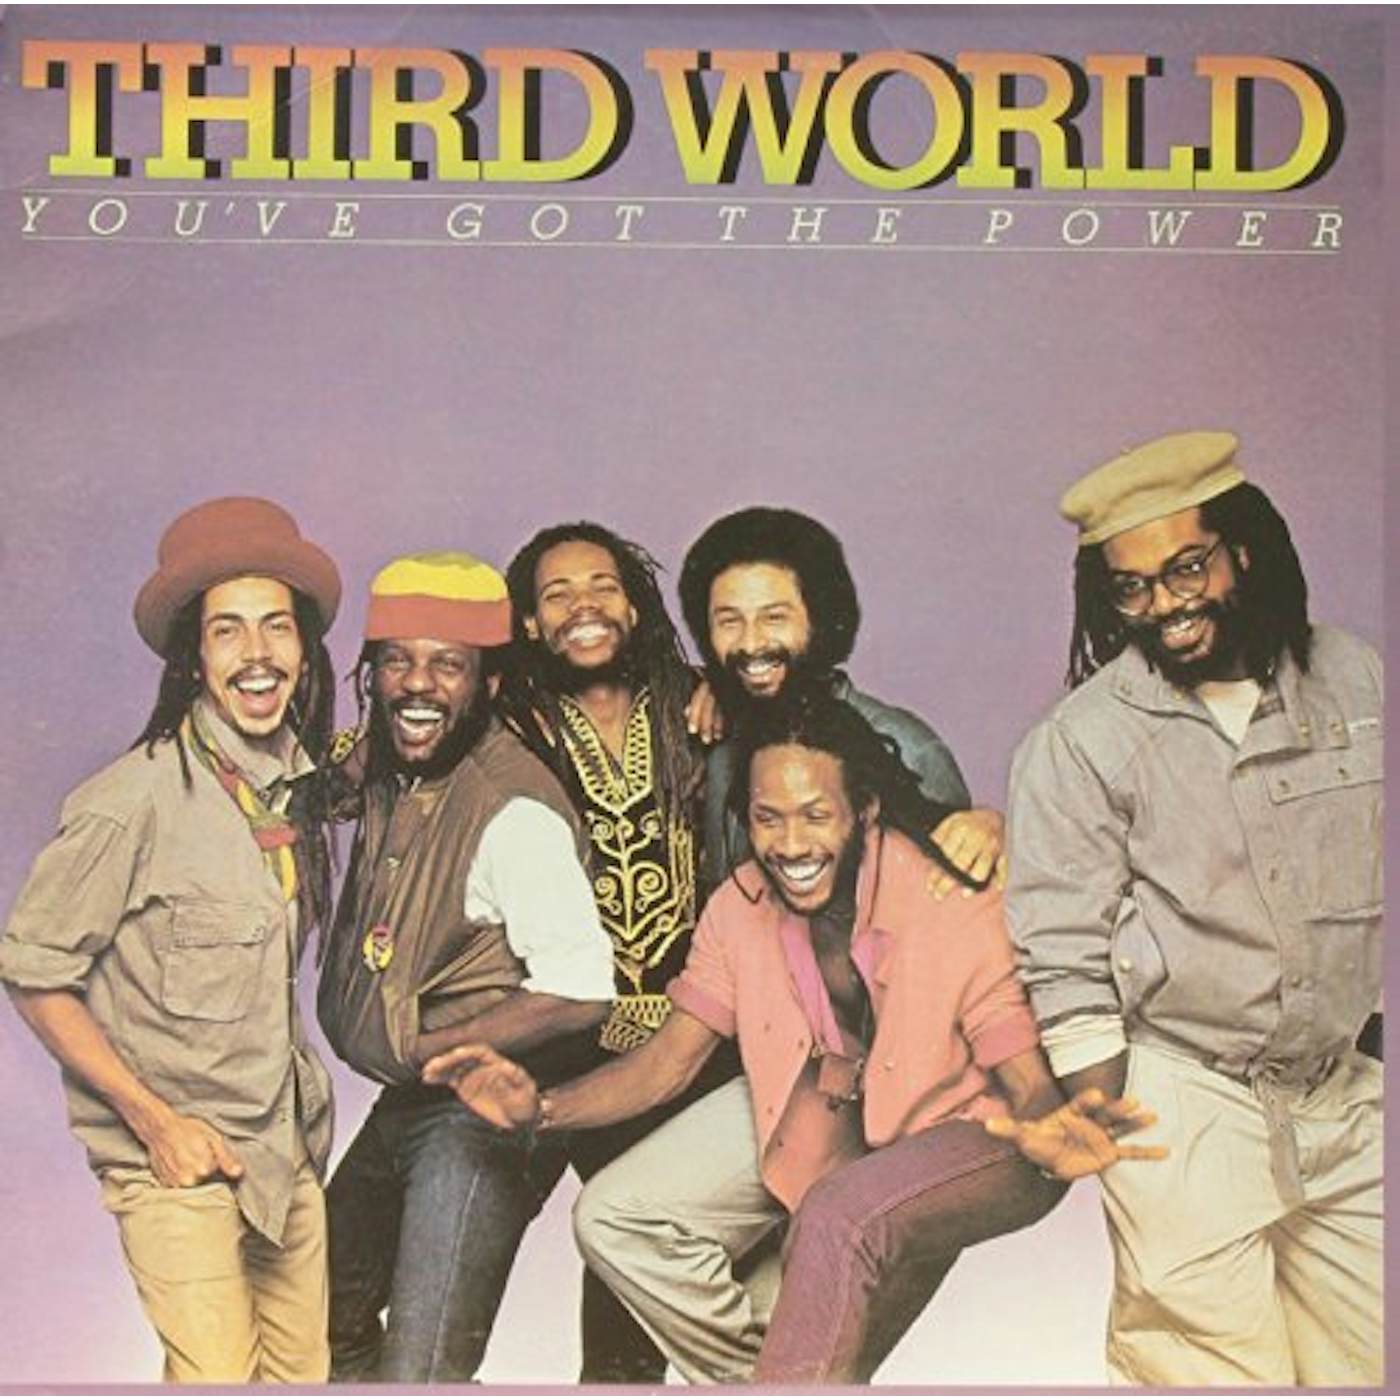 Third World You've Got The Power Vinyl Record